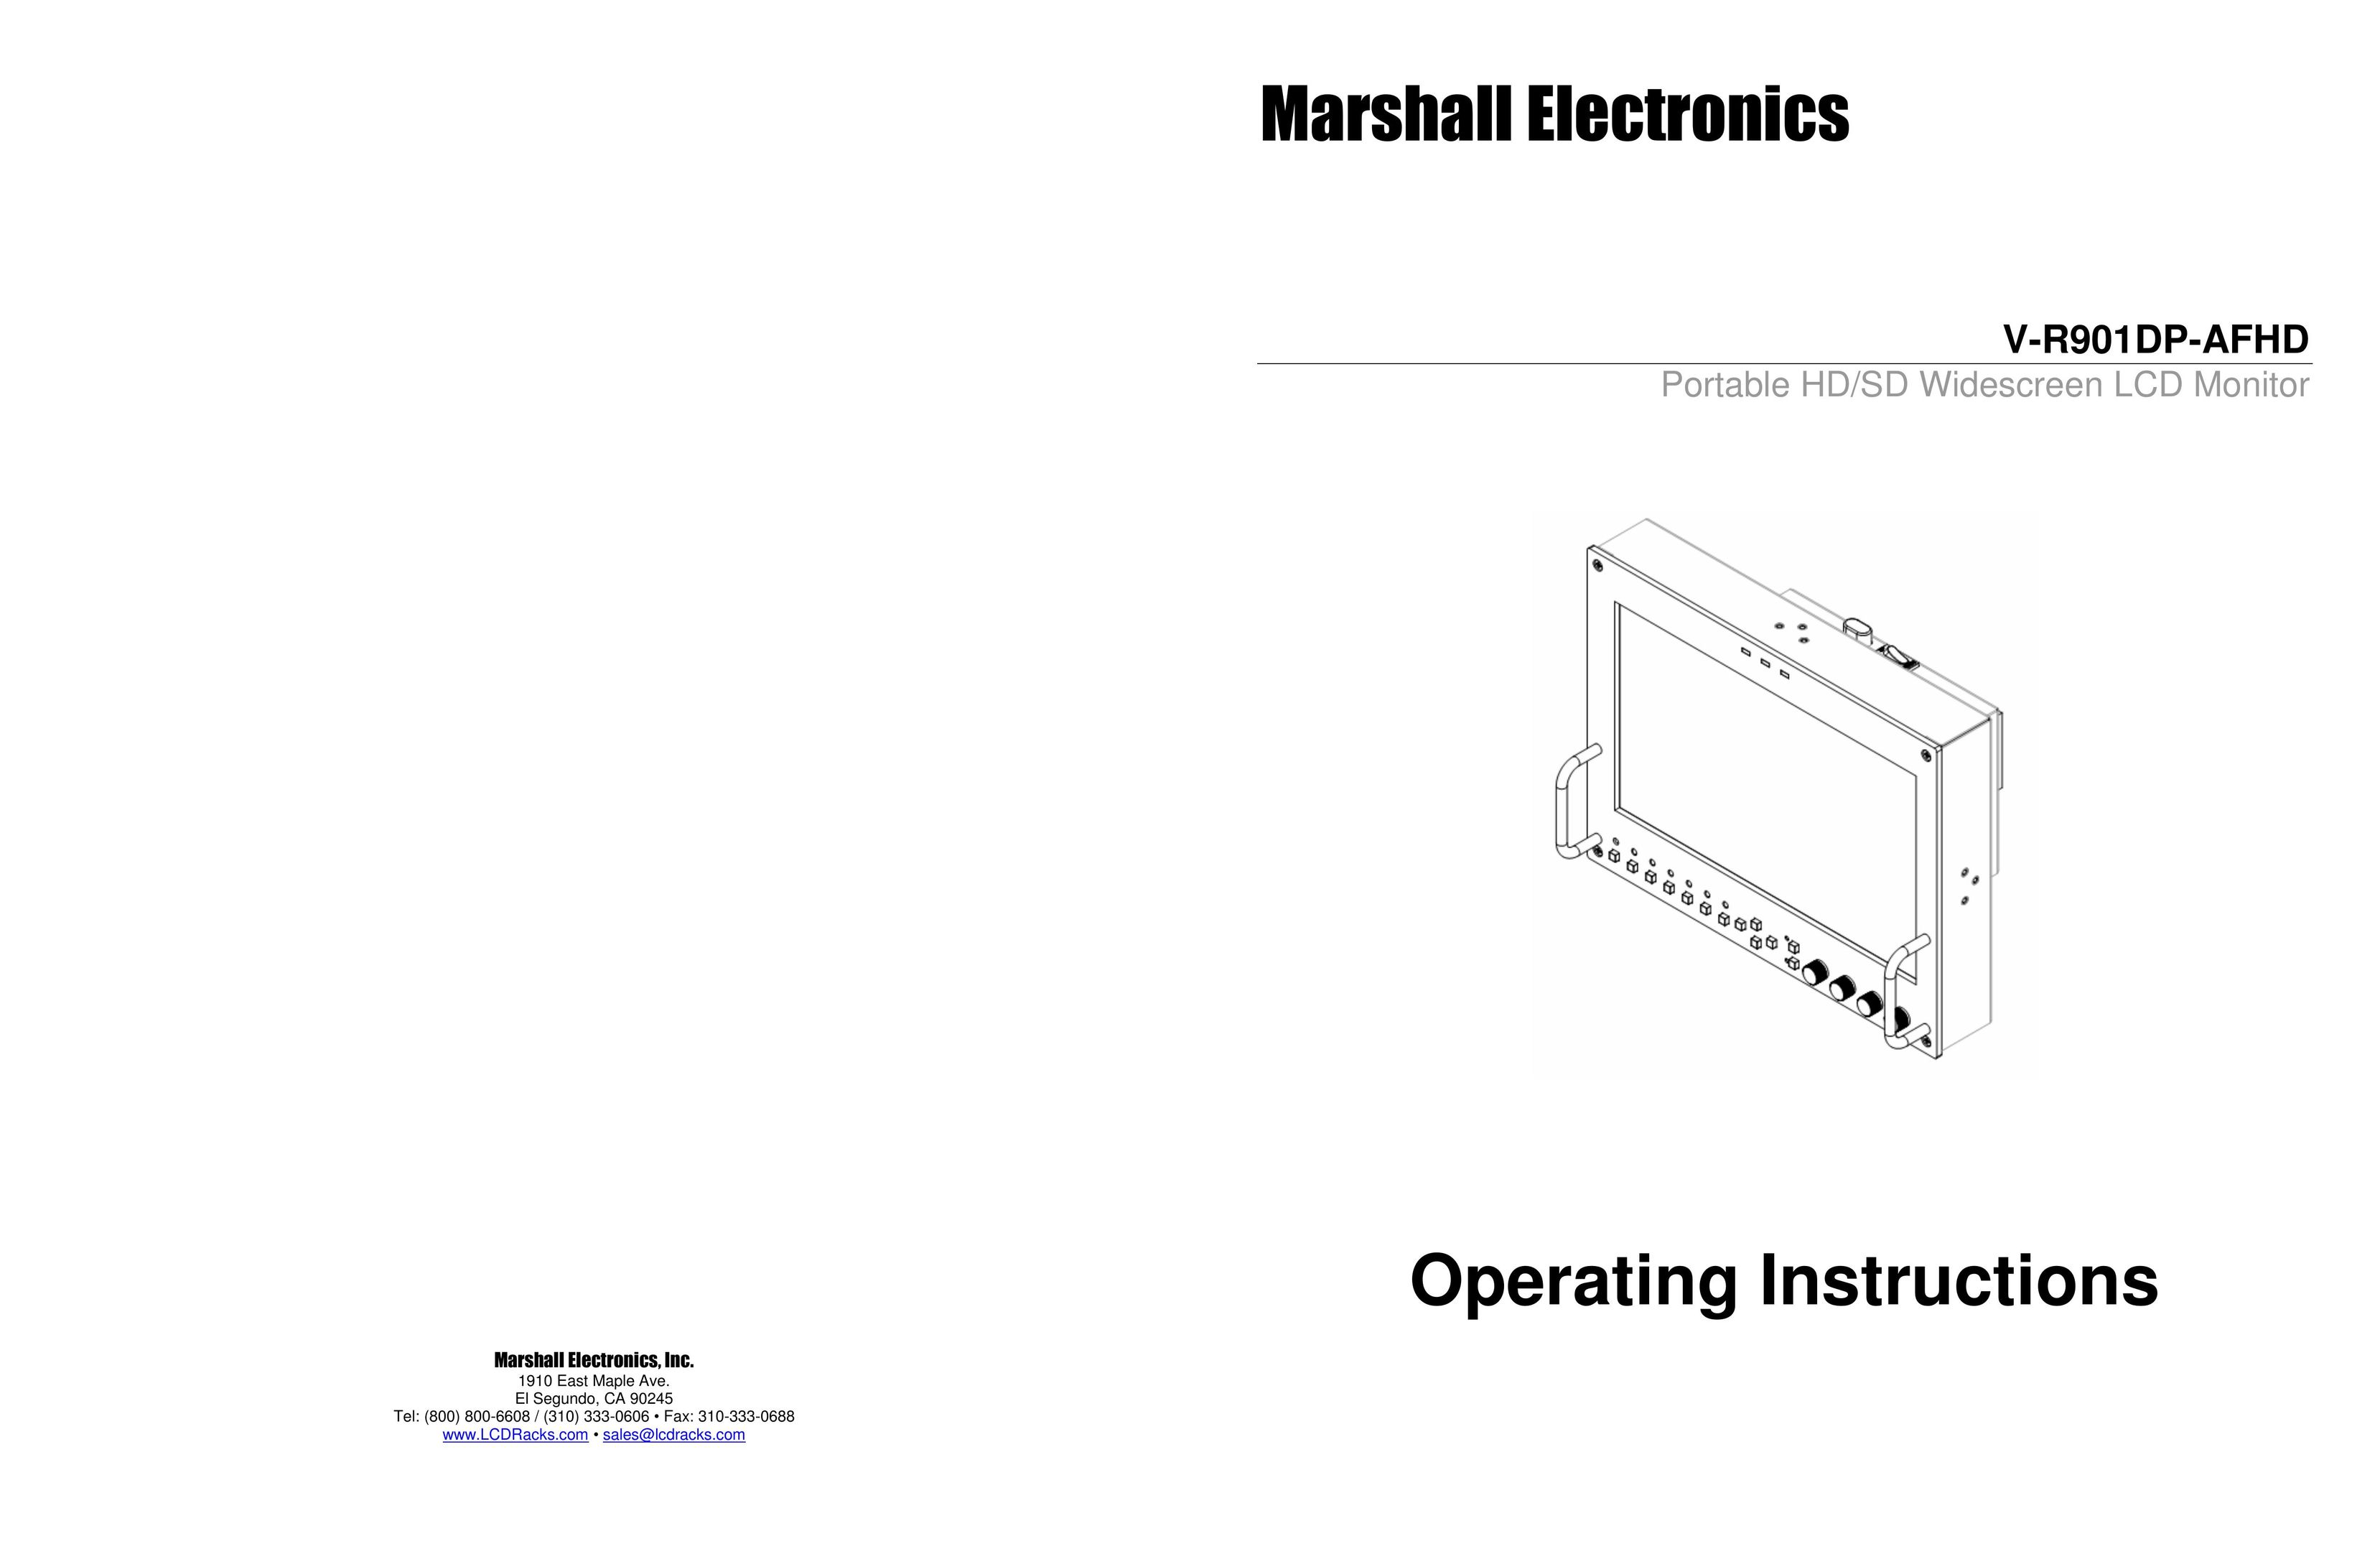 Marshall electronic V-R901DP-AFHD Computer Monitor User Manual